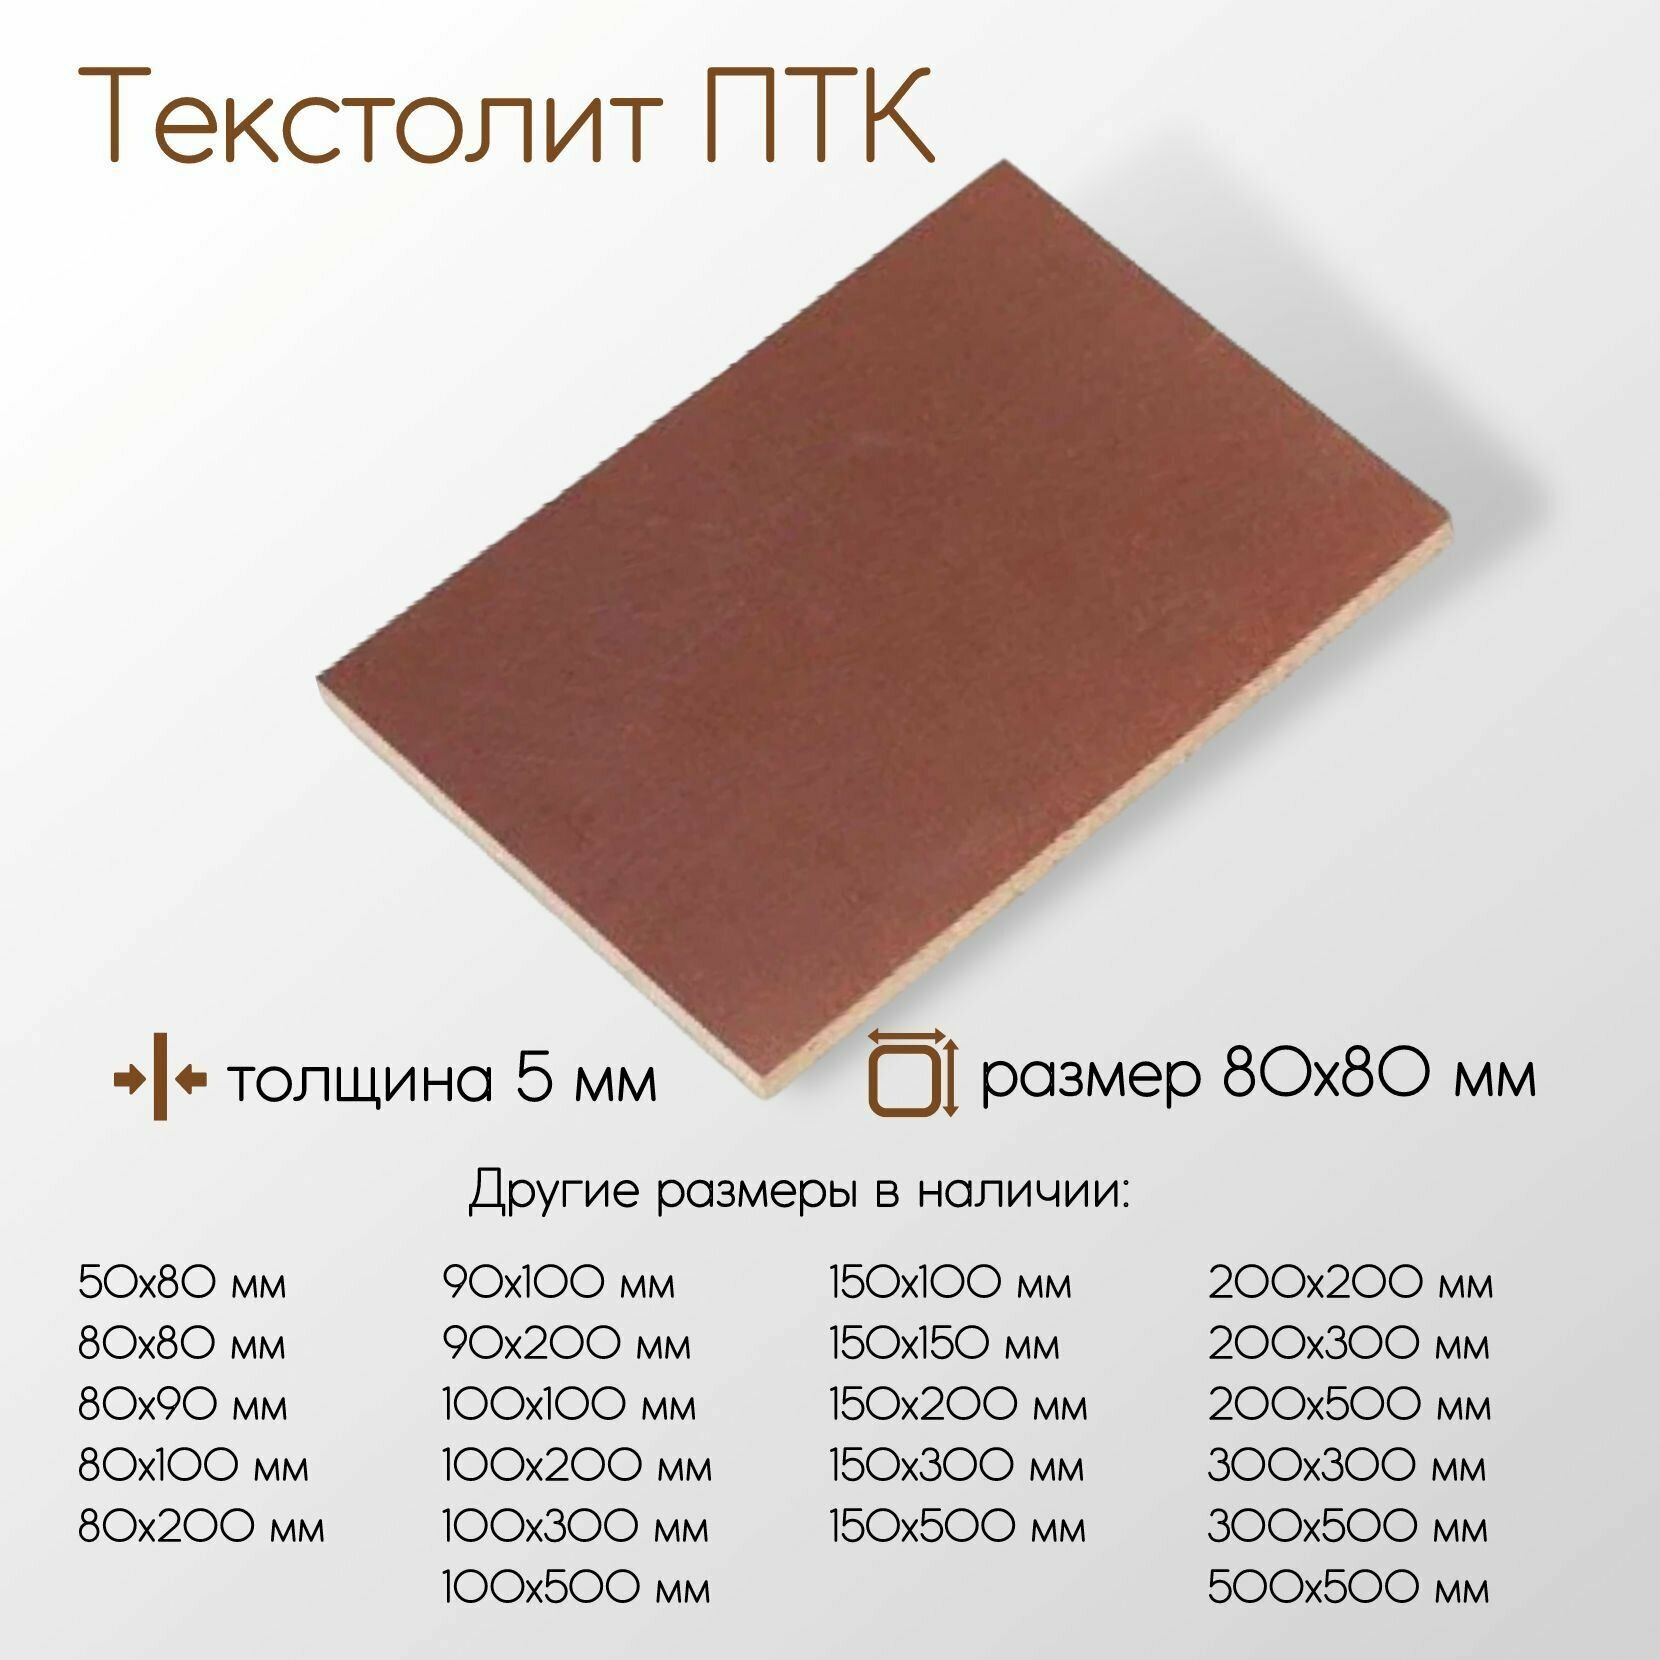 Текстолит ПТК лист толщина 5 мм 5x80x80 мм